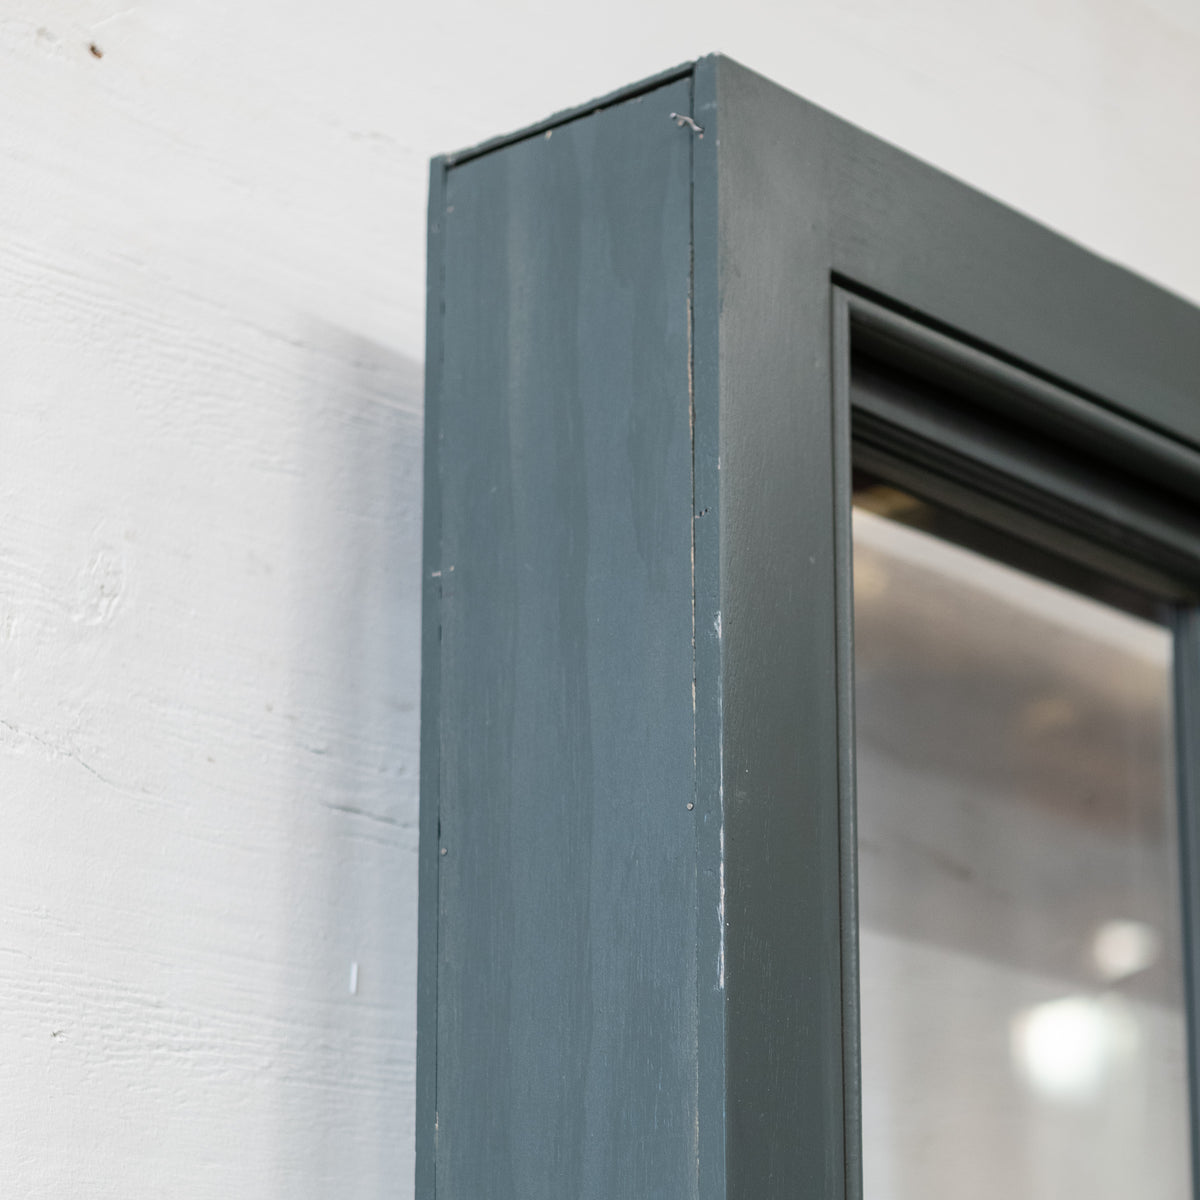 New Slimlite Double Glazed Georgian Sash Window Unit (210cm x 79.5cm) | The Architectural Forum